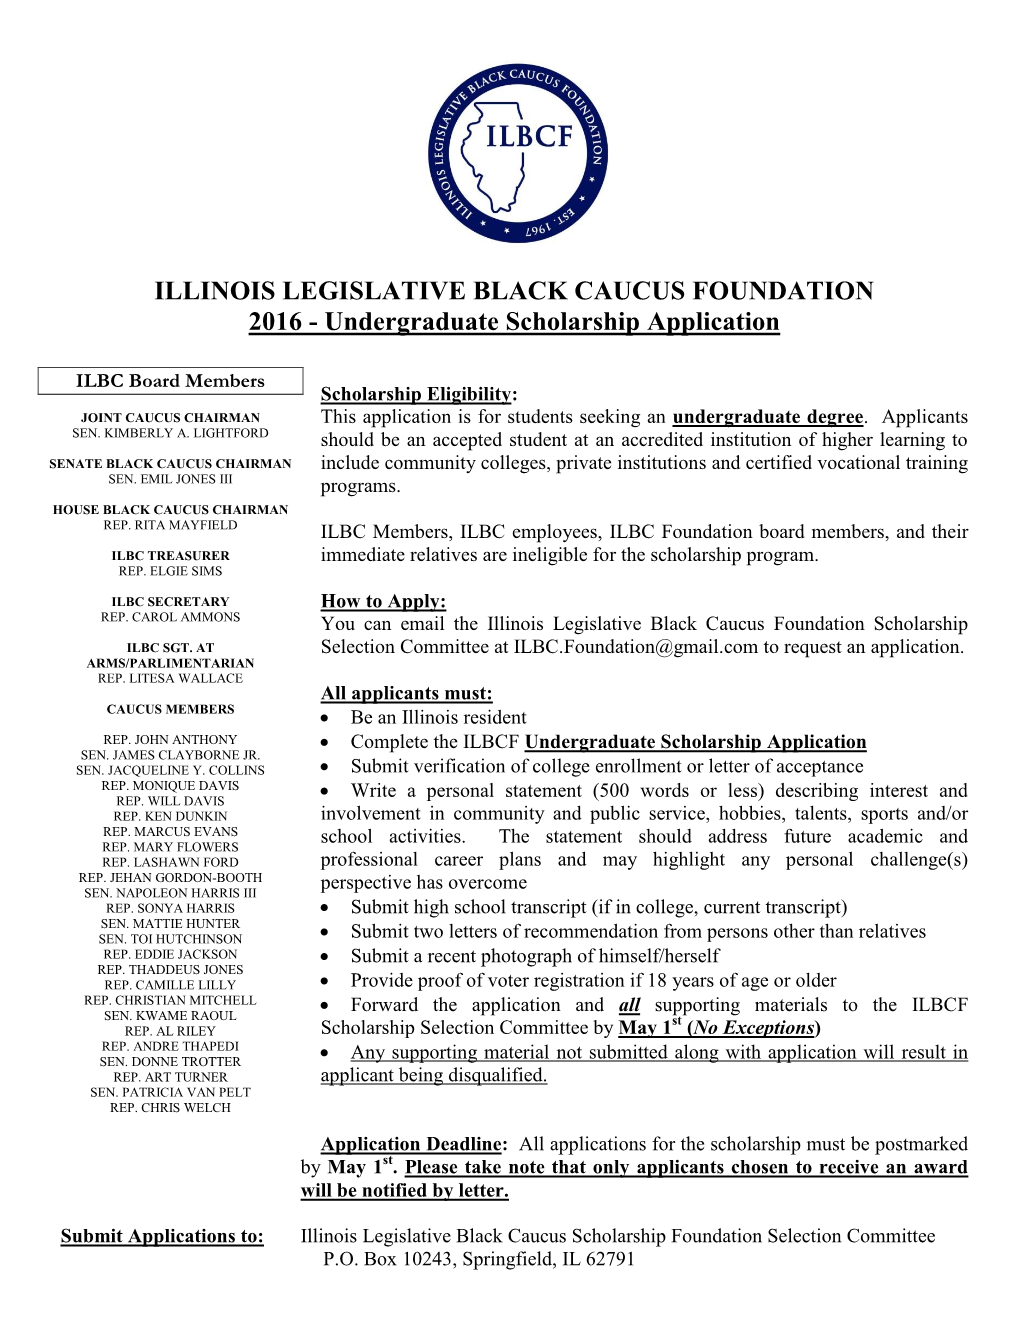 ILLINOIS LEGISLATIVE BLACK CAUCUS FOUNDATION 2016 - Undergraduate Scholarship Application